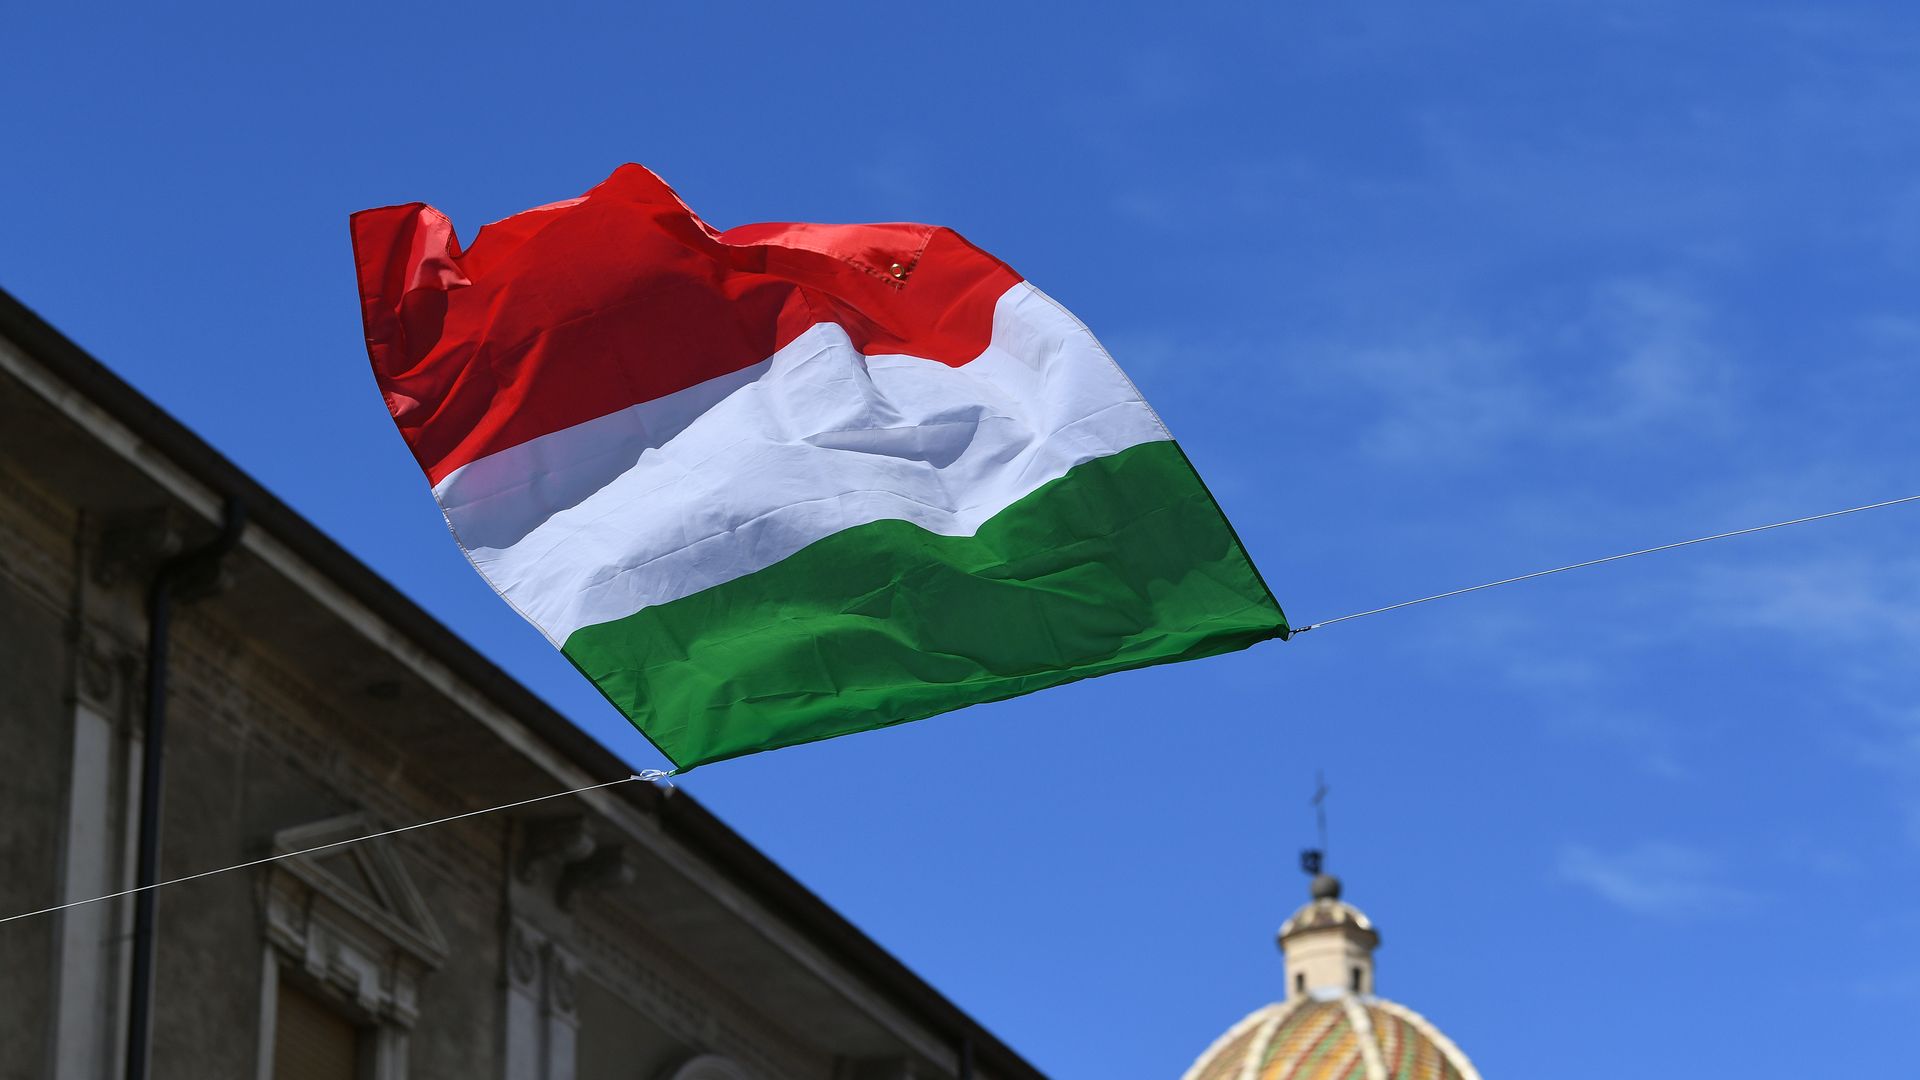 Italian flag. Photo by Tim de Waele/Getty Images